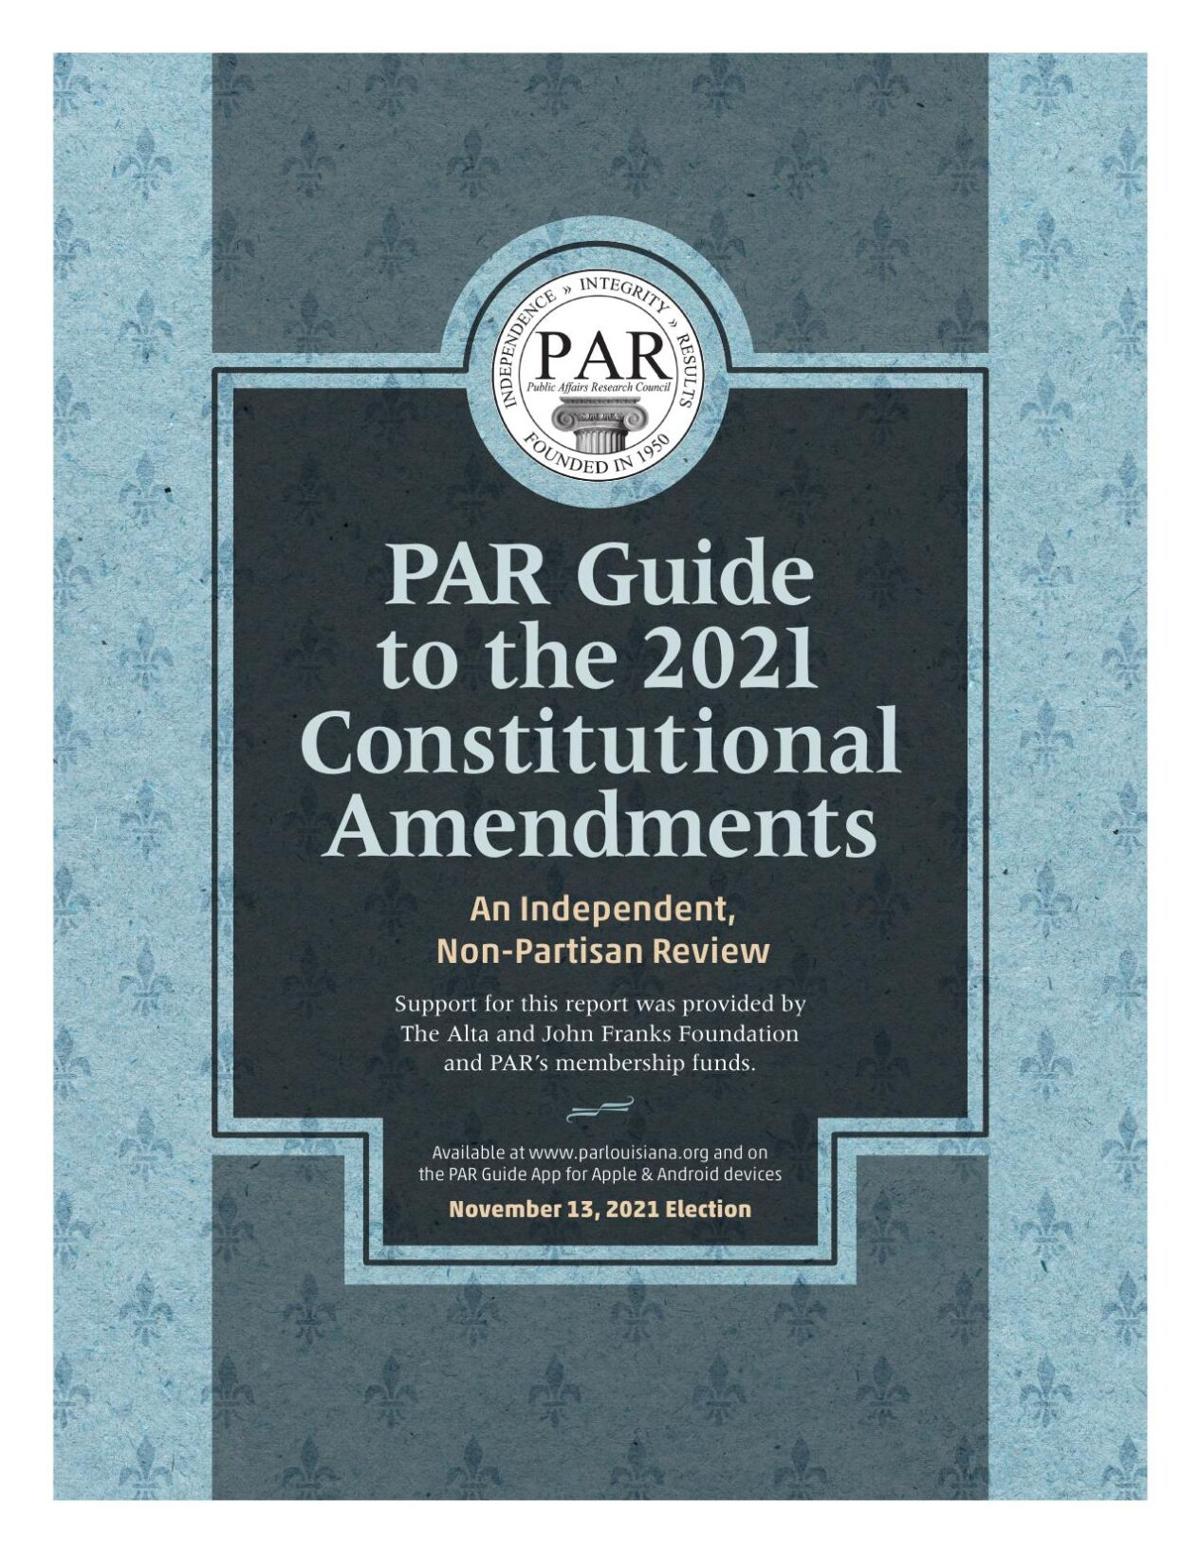 PAR Guide to Constitutional Amendments on Nov. 13 ballot